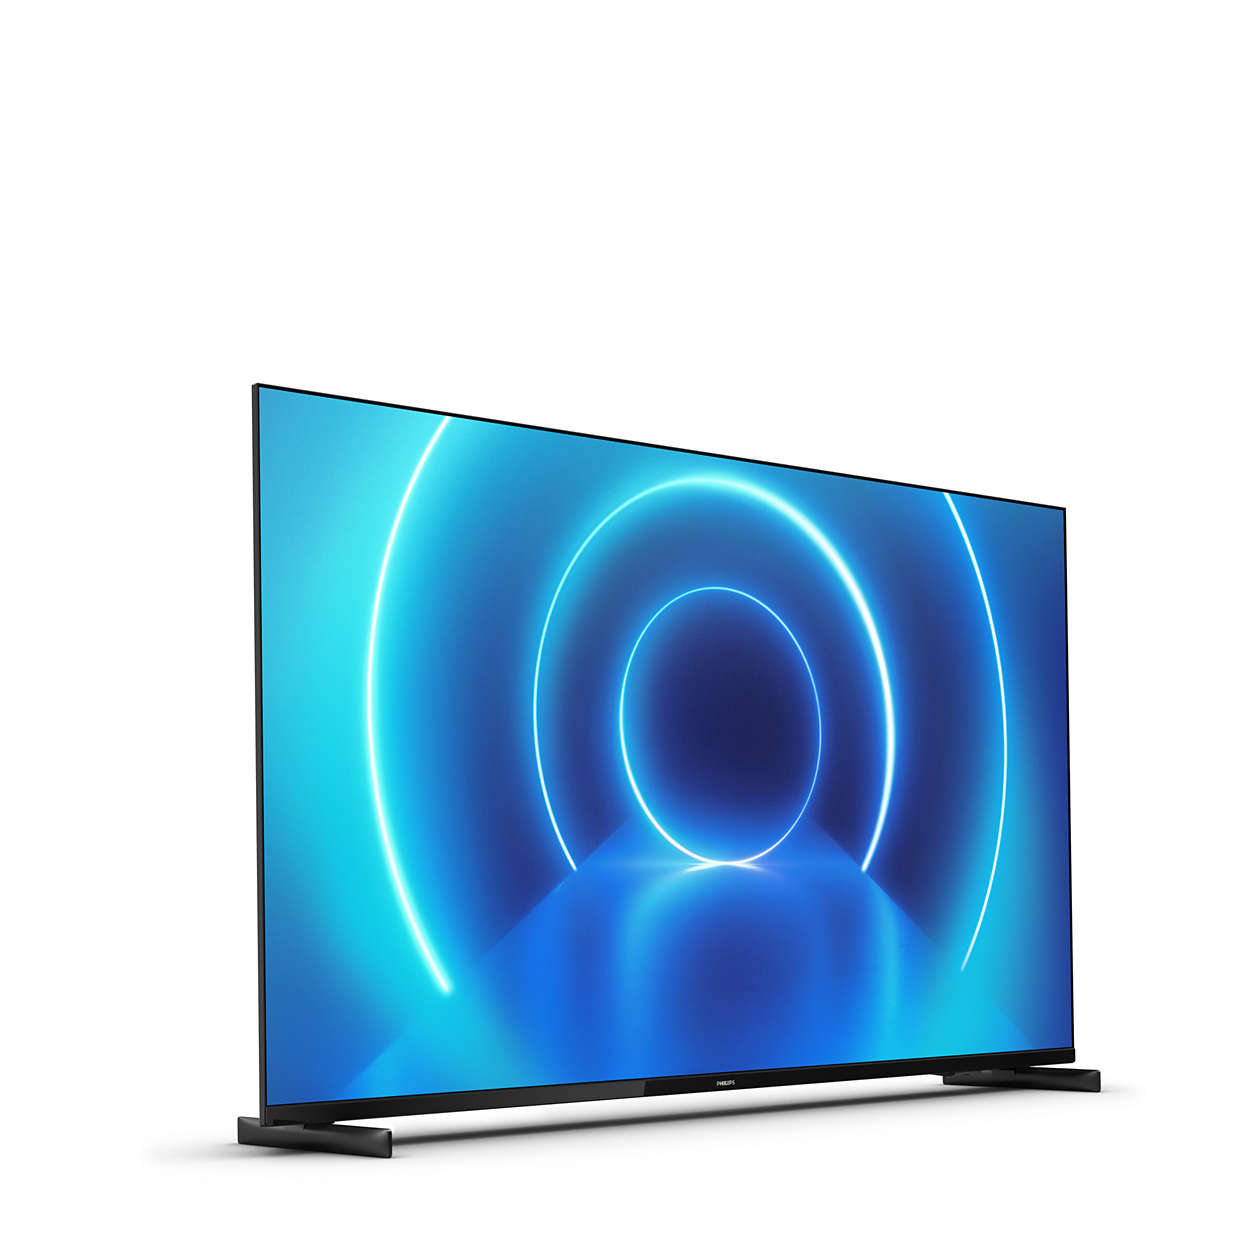 Gracias Bailarín Caso 7600 series 4K UHD LED Smart TV 50PUT7605/56 | Philips